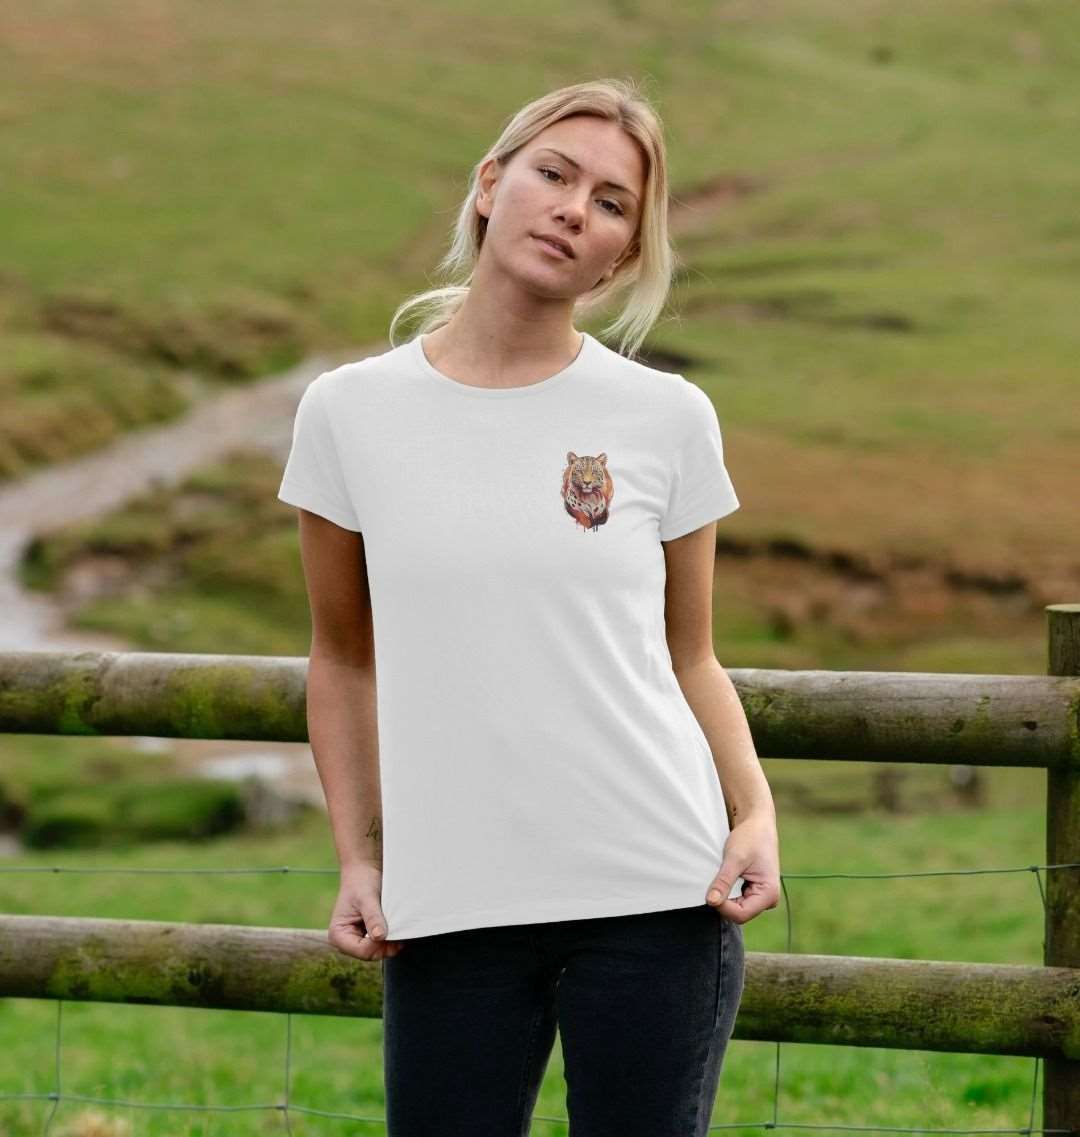 Women's leopard design crew neck organic cotton t-shirt - Premium Eco Chic Printed T-shirt from Eco Threadz - Just £20! Shop now at Eco Threadz